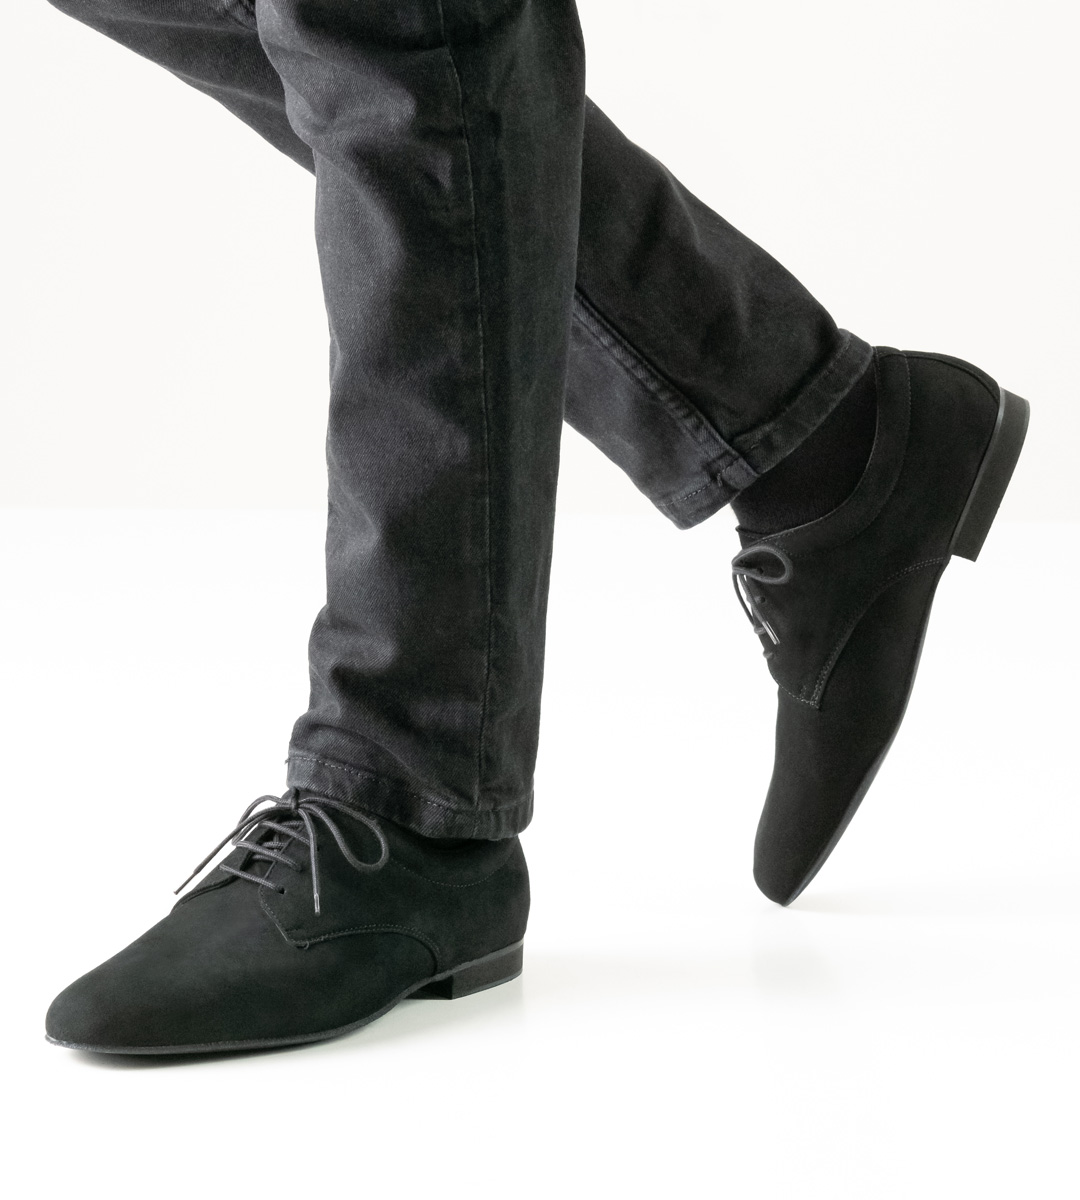 black men's dance shoe by Werner Kern with micro heel